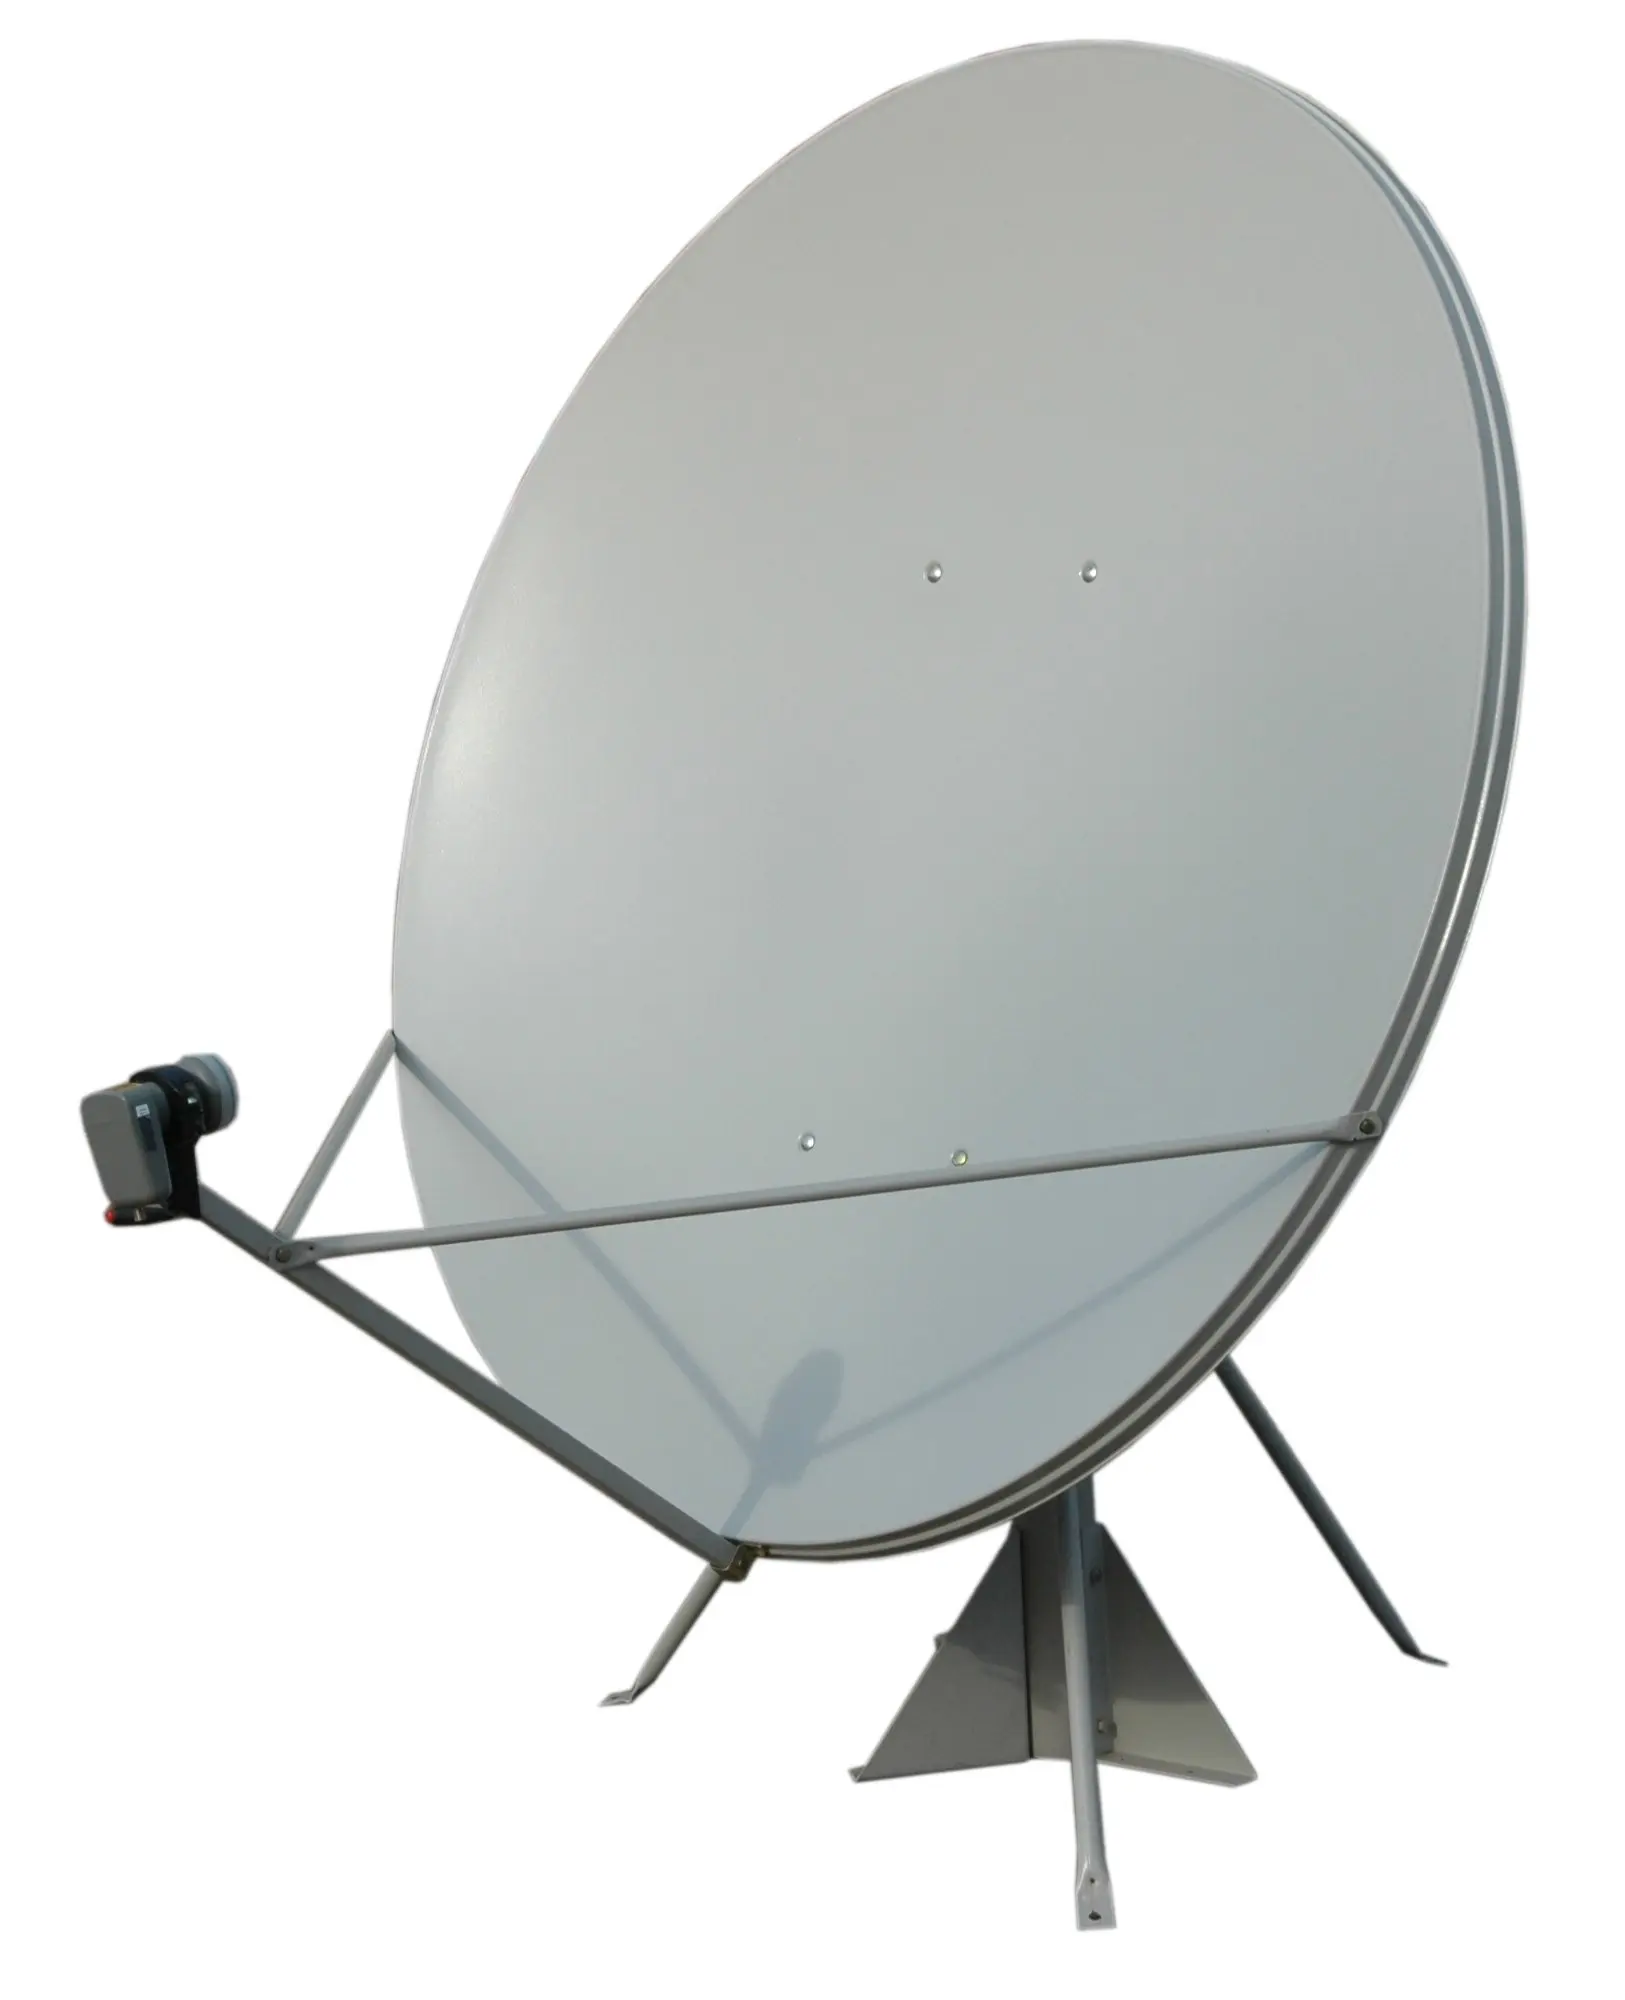 Satellite dish. Спутниковая антенна ku-120 SKYMAX. Спутниковая тарелка 35см. Спутниковая параболическая антенна. Спутниковая антенна 80 см.